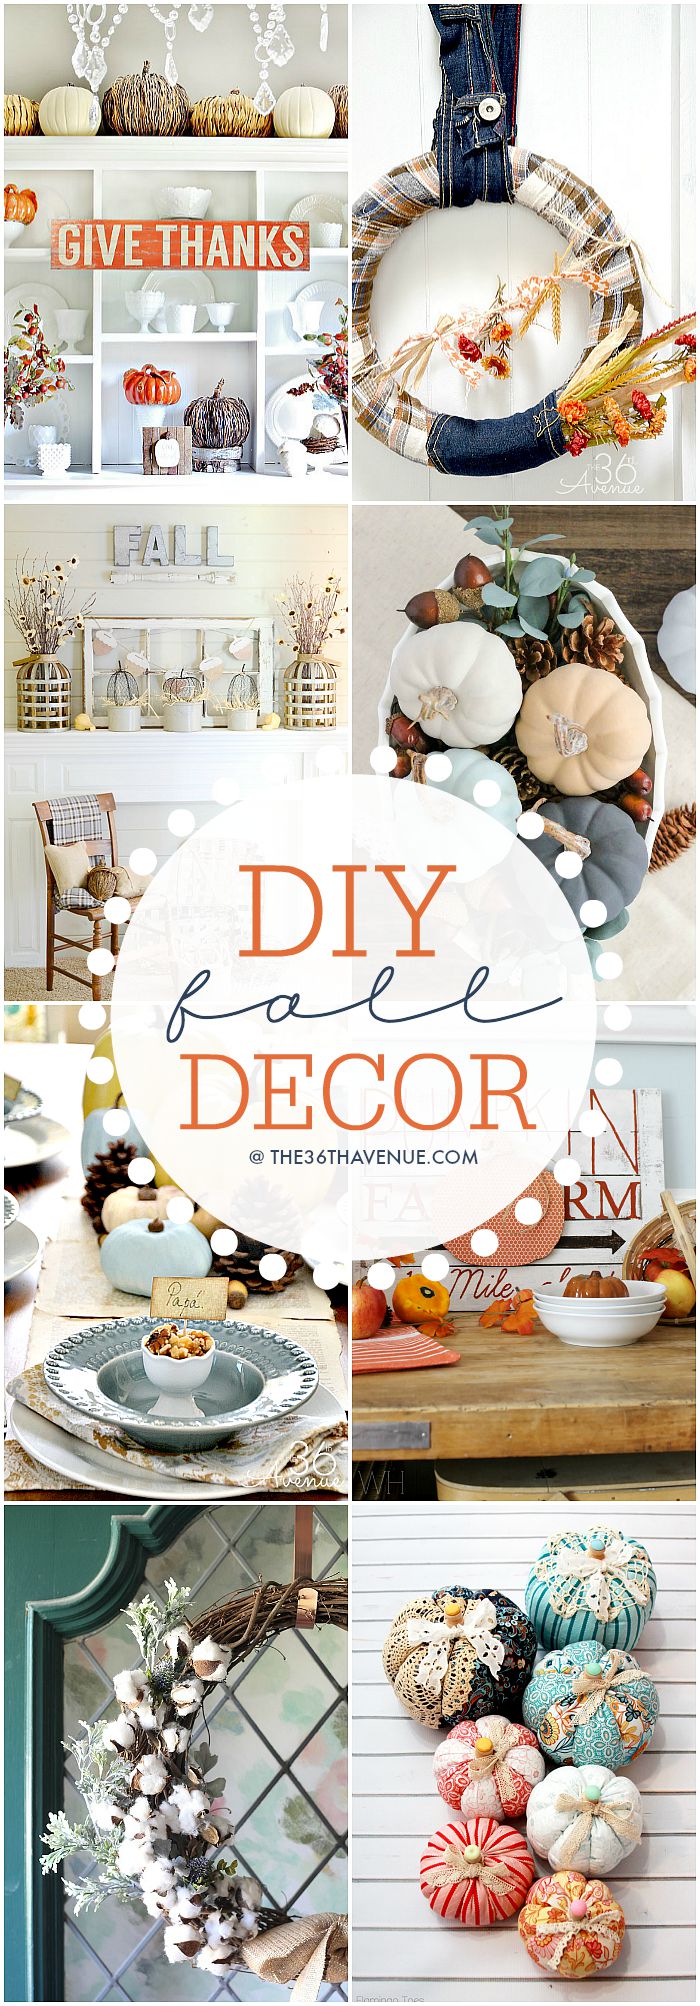 DIY Fall Decor Ideas at the36thavenue.com